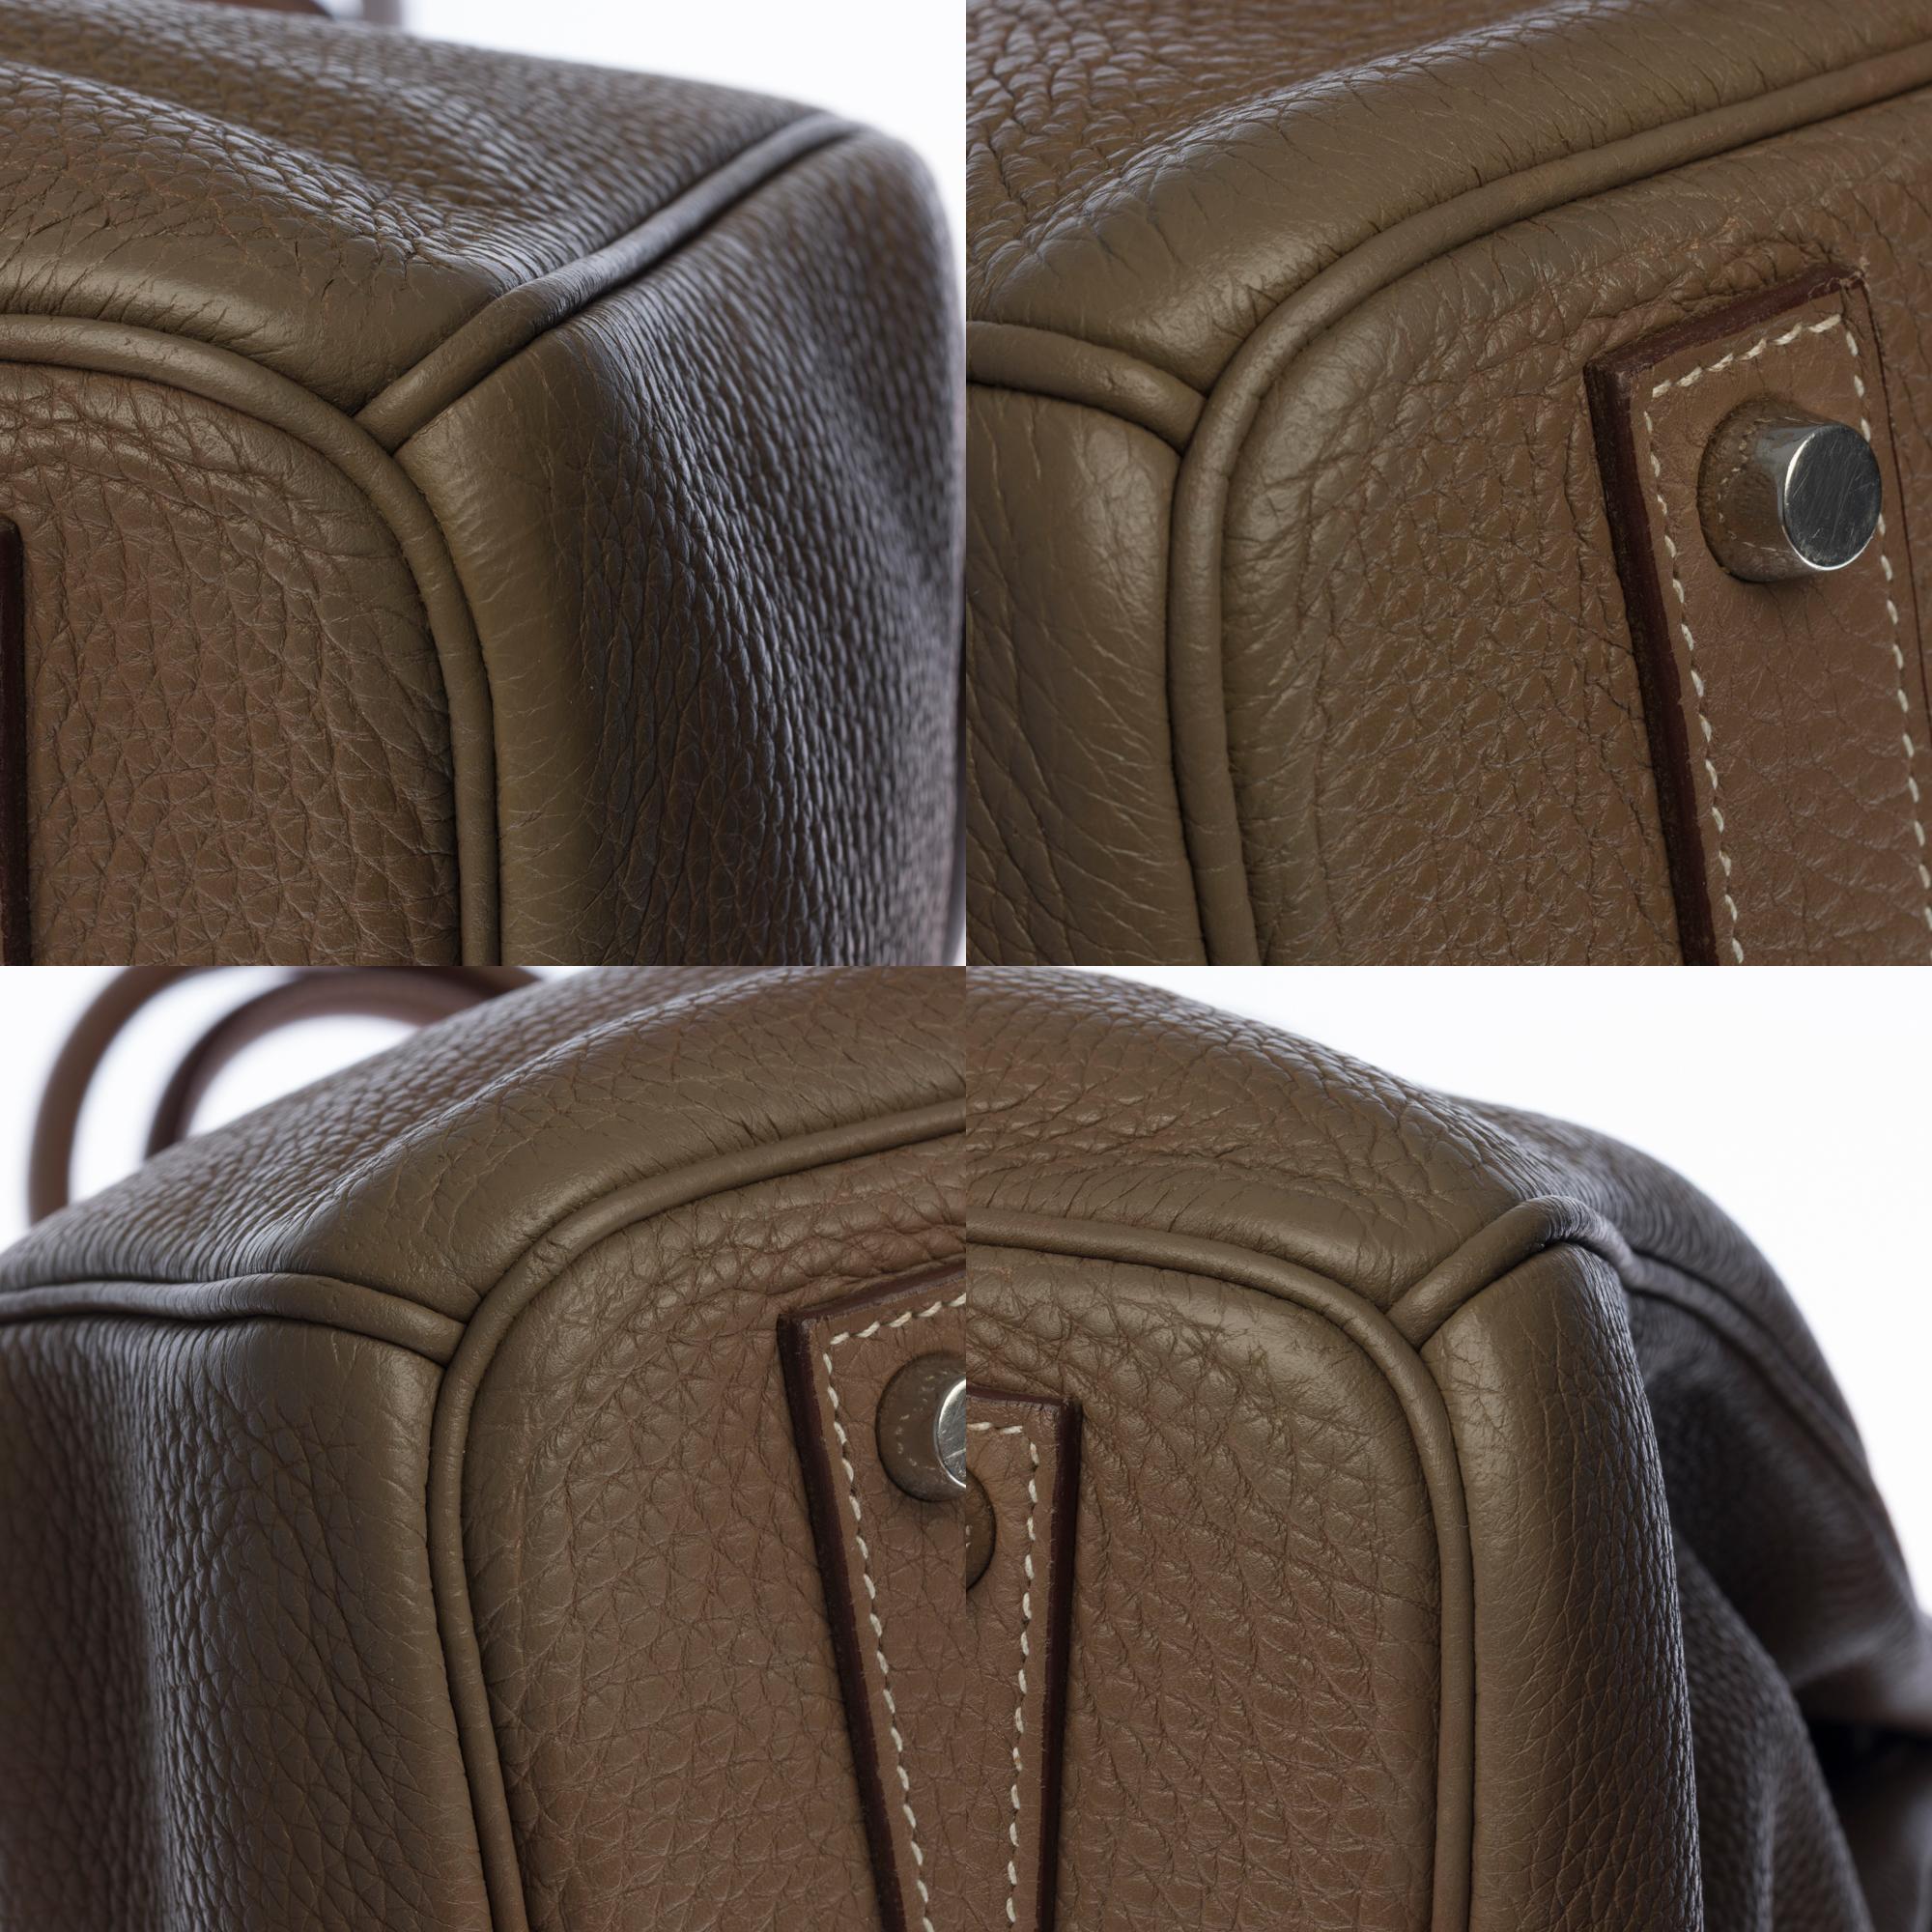 Stunning Hermes Birkin 40cm handbag in Etoupe Togo leather, SHW 4